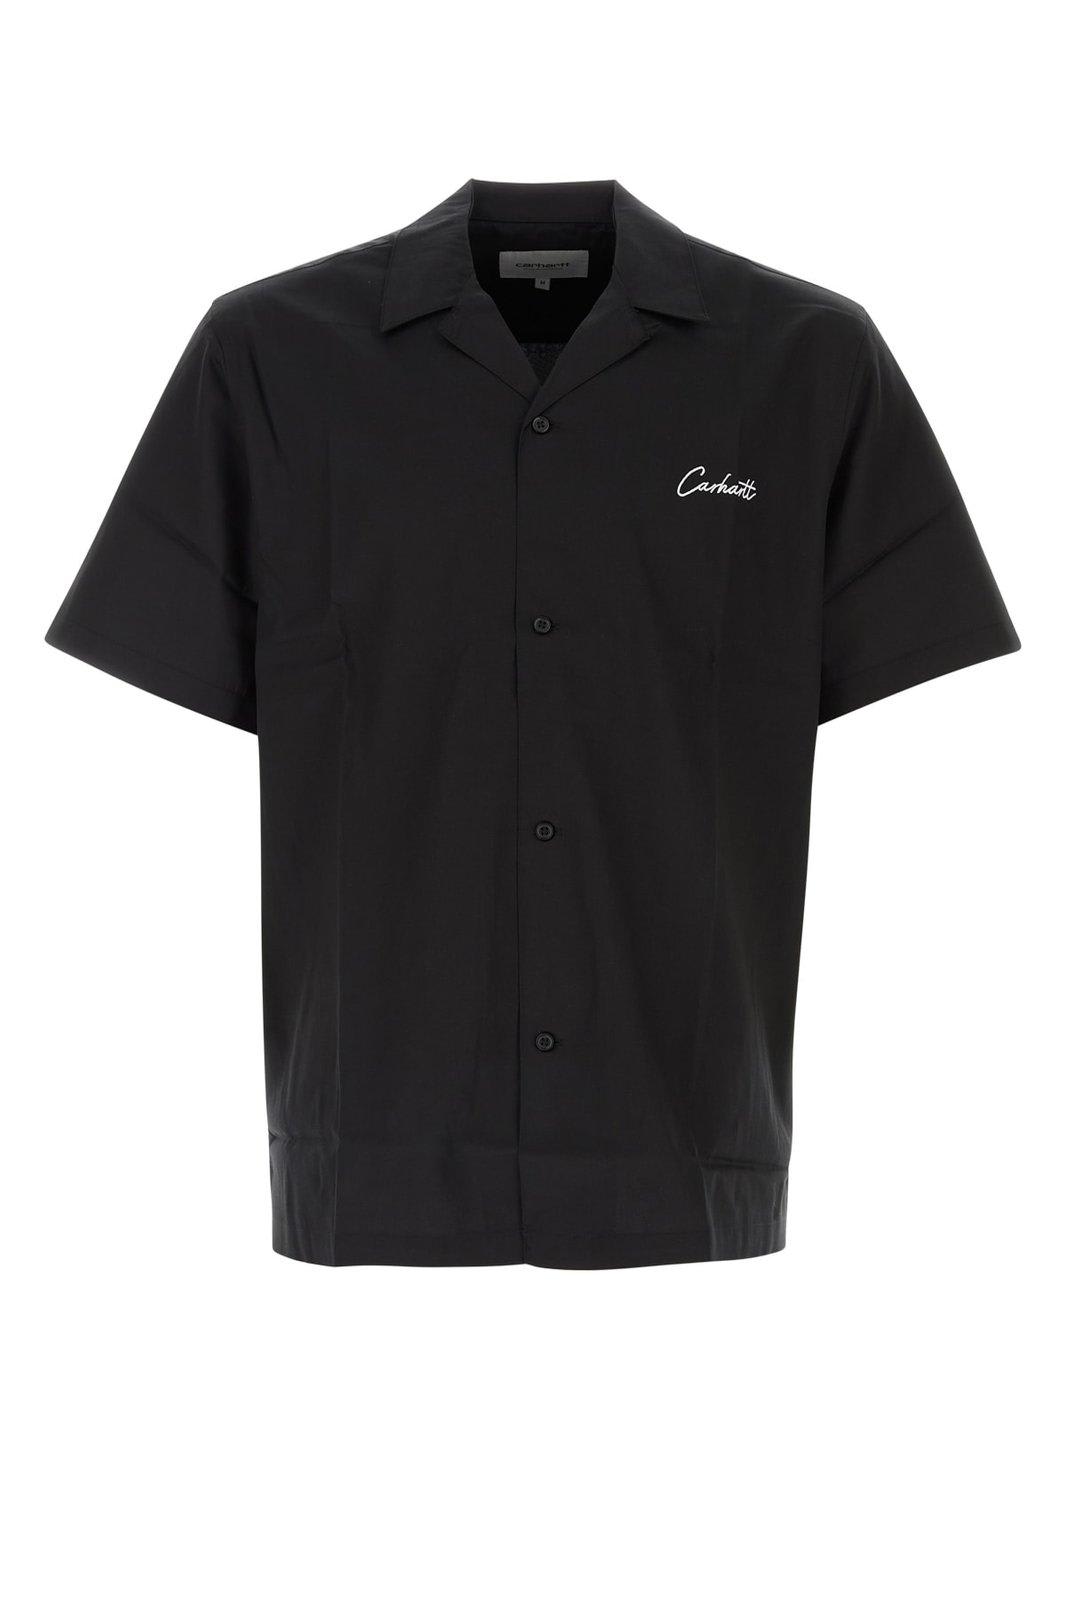 Carhartt Logo Embroidered Short-sleeved Shirt In Black Wax